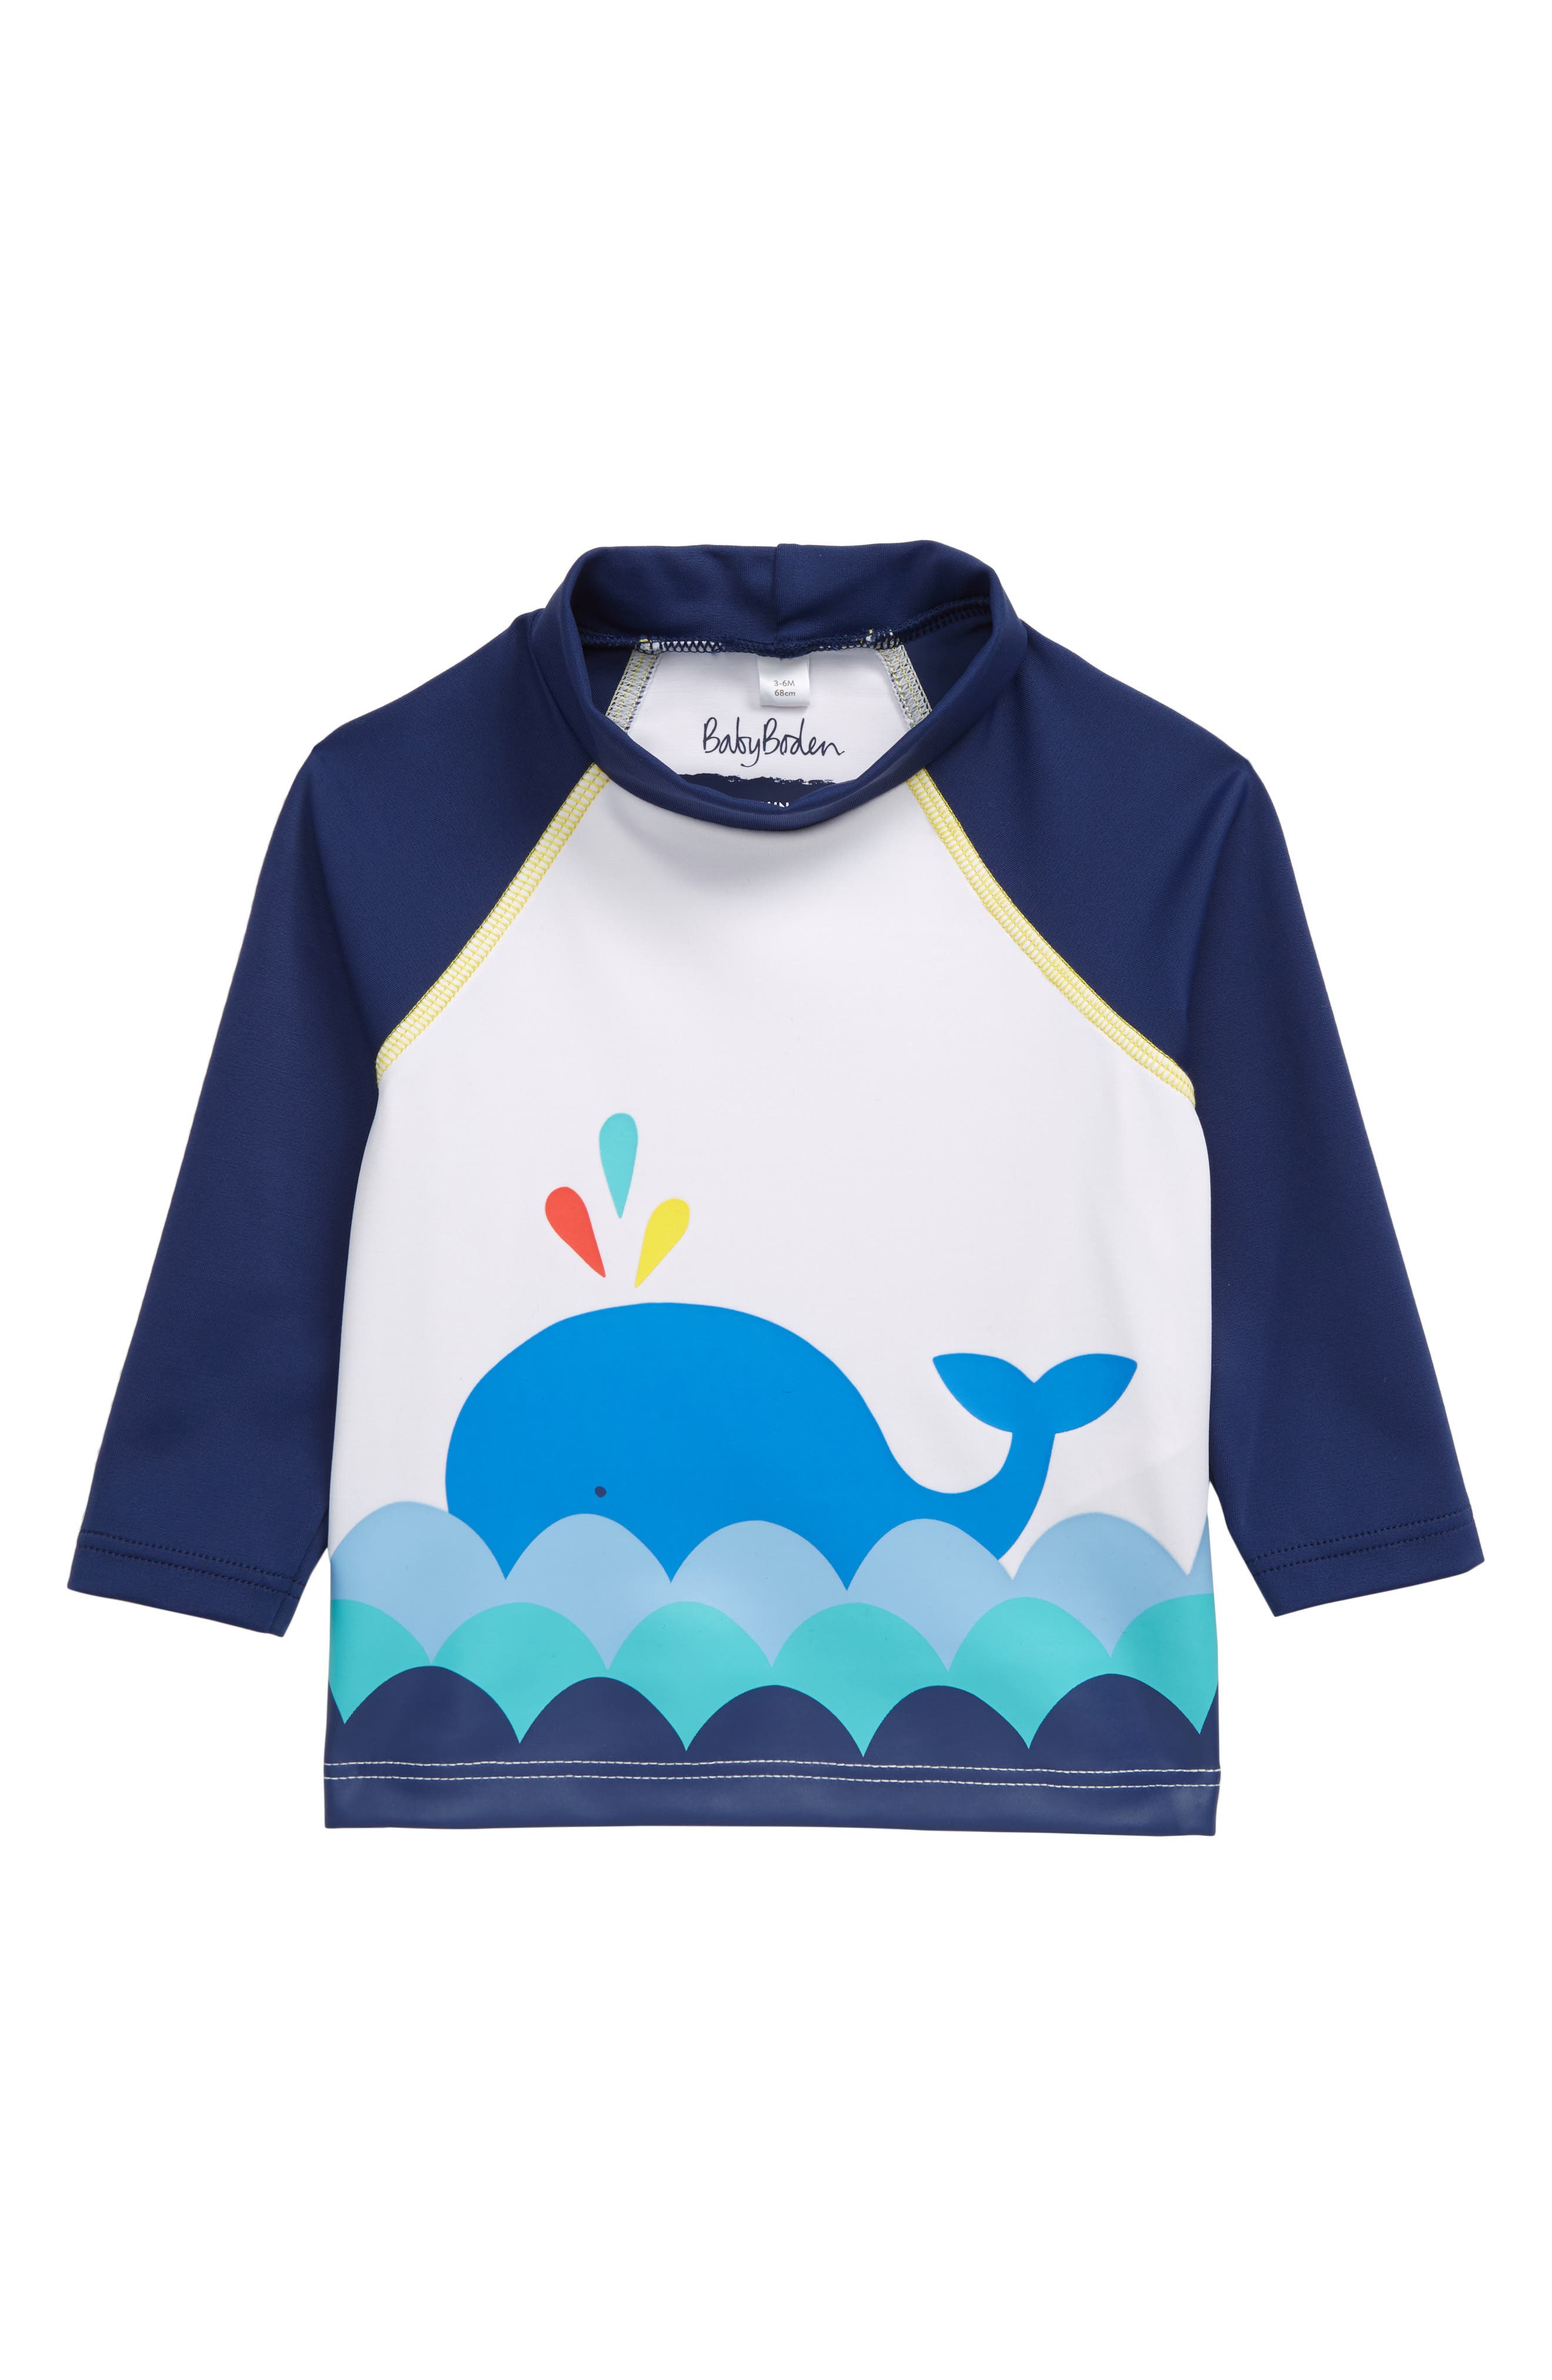 New MINI Boden Baby boy top shirt tee seaside graphic print adventure applique 